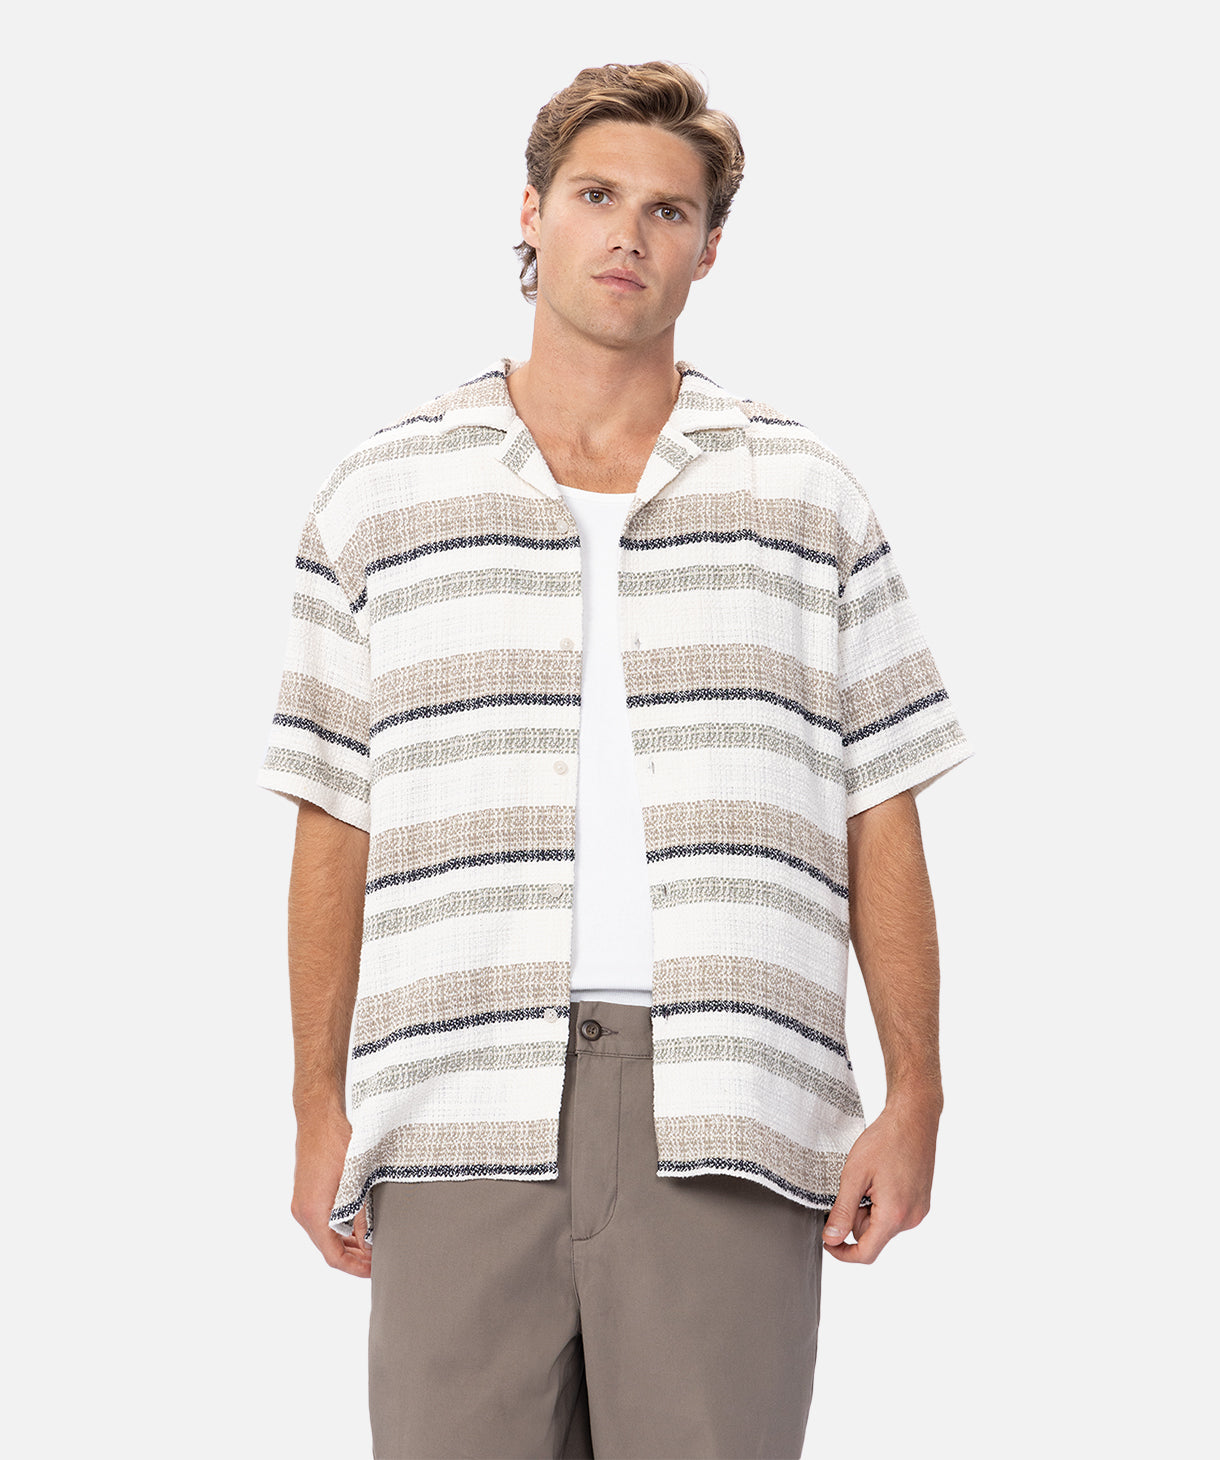 The Venderes S/s Shirt - Cream Combo – Industrie Clothing Pty Ltd